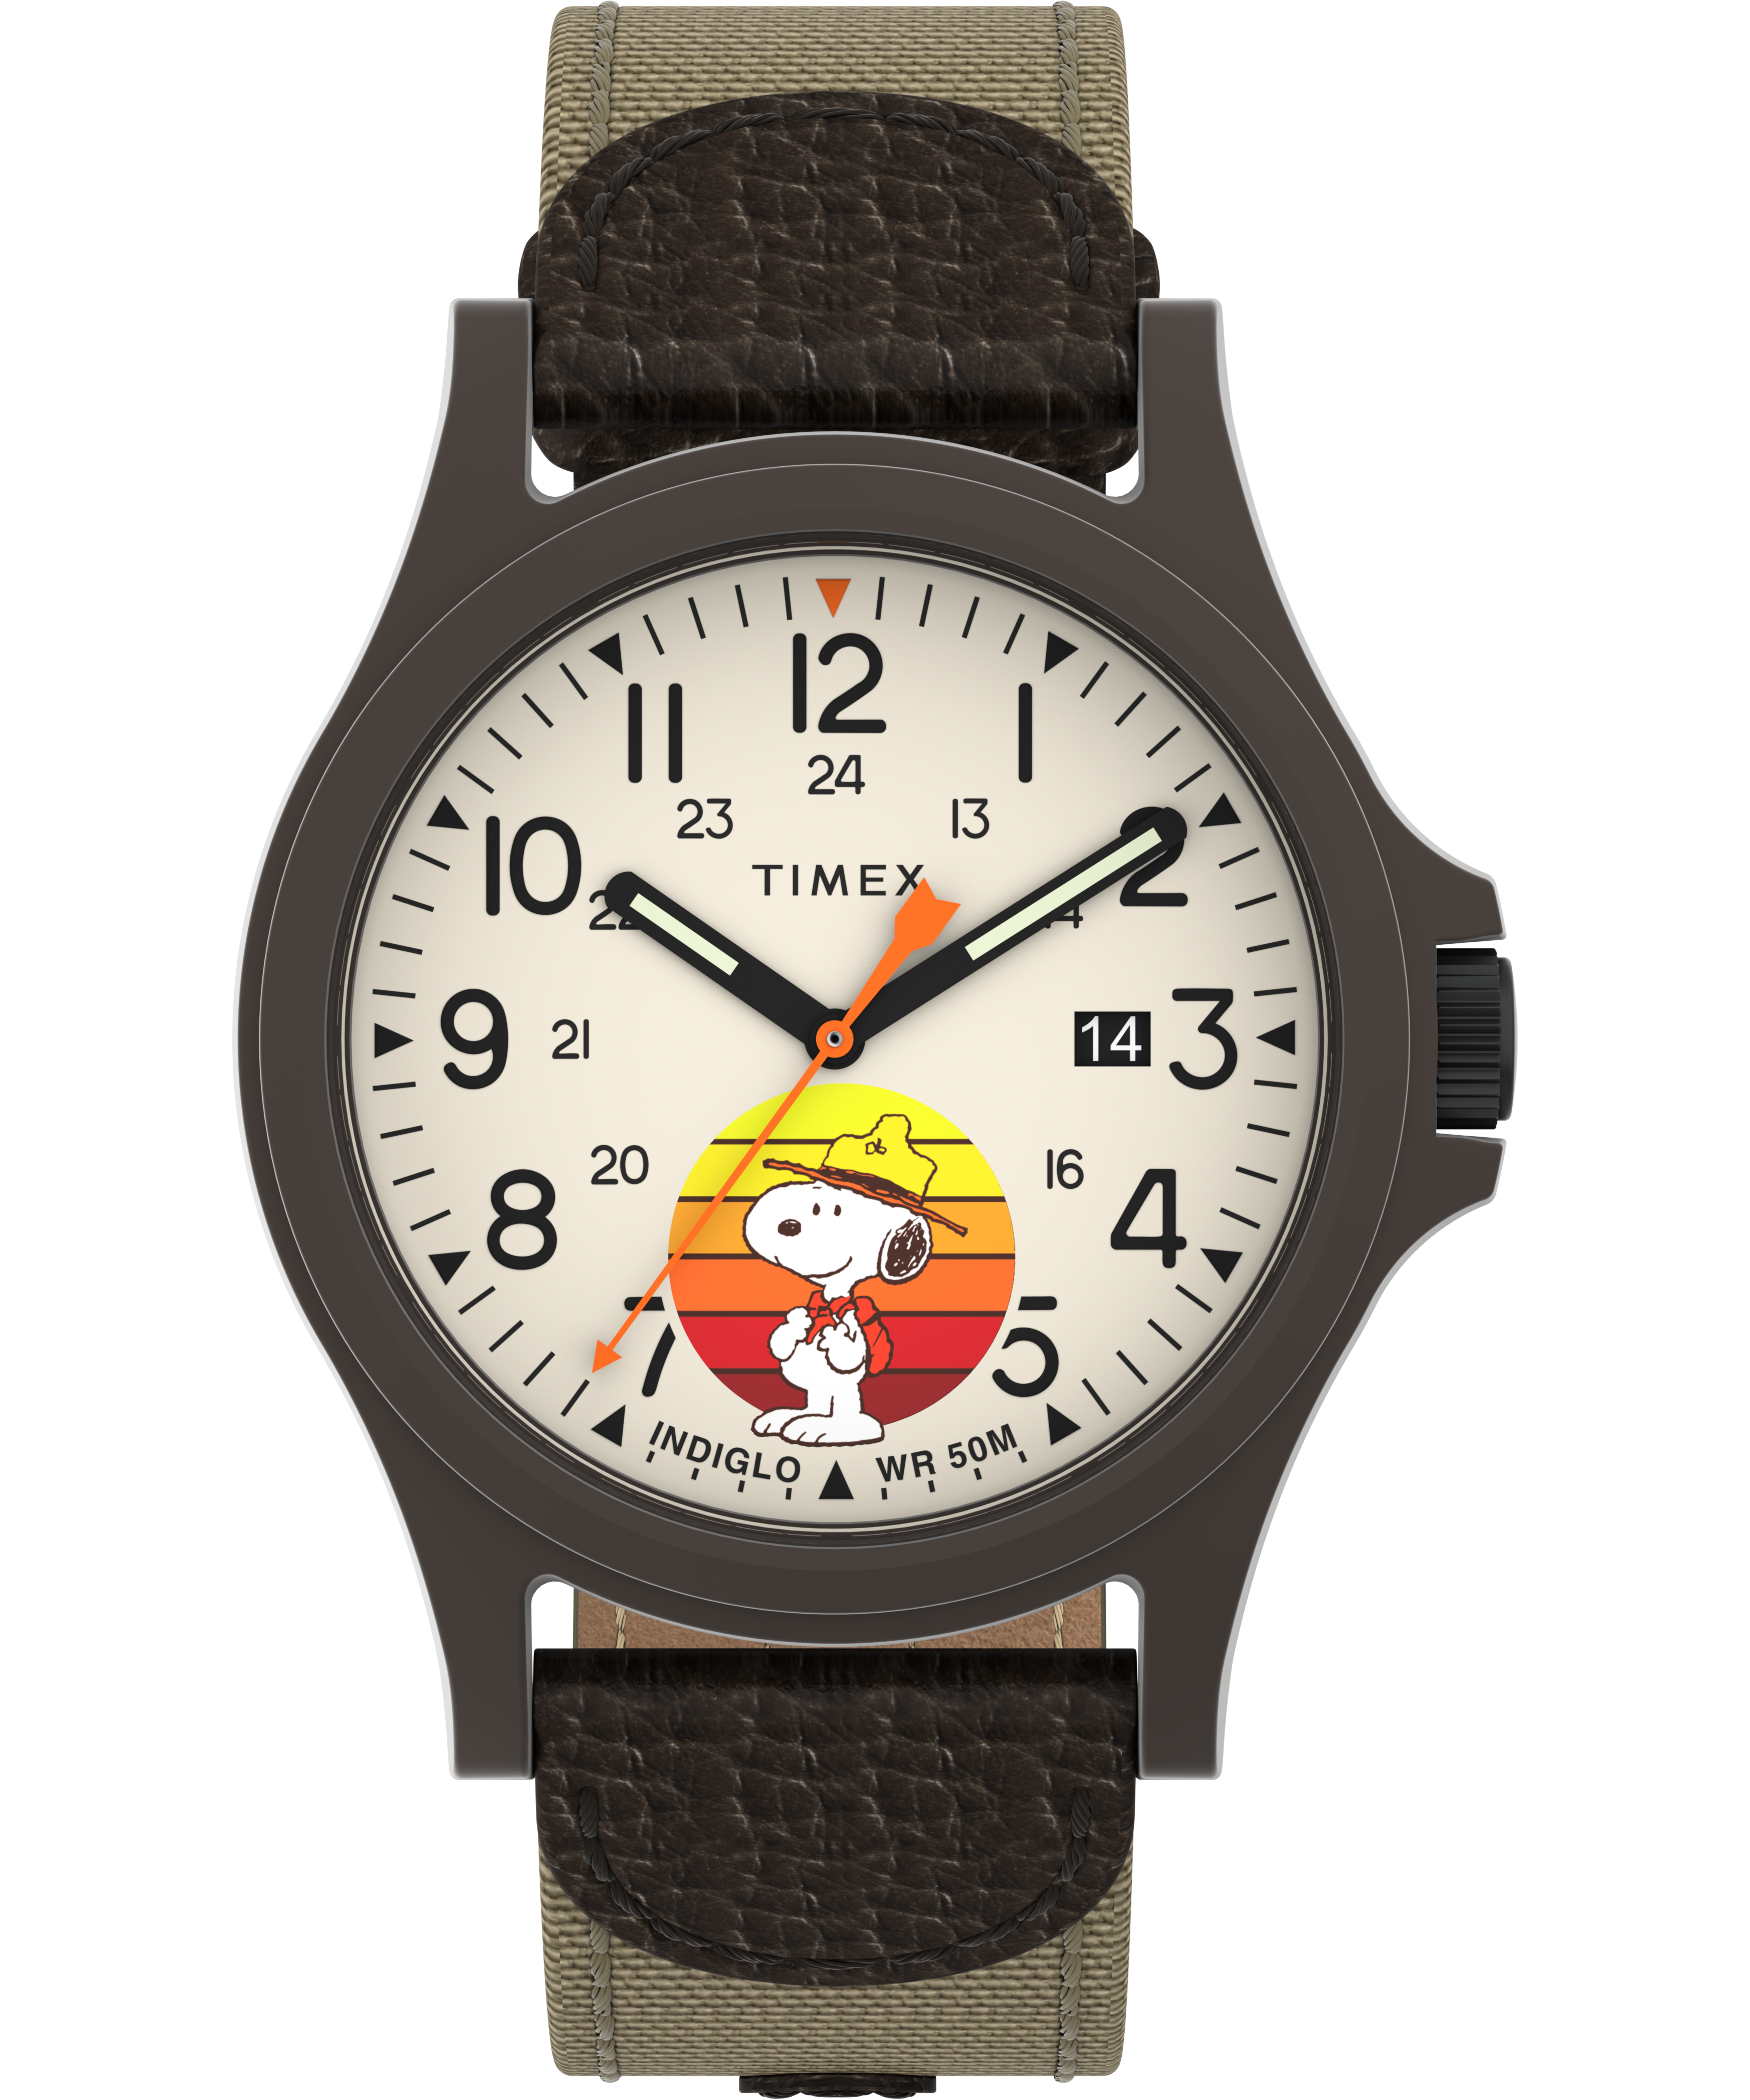 Original G-tab gt3 smartwatch | Kupatana